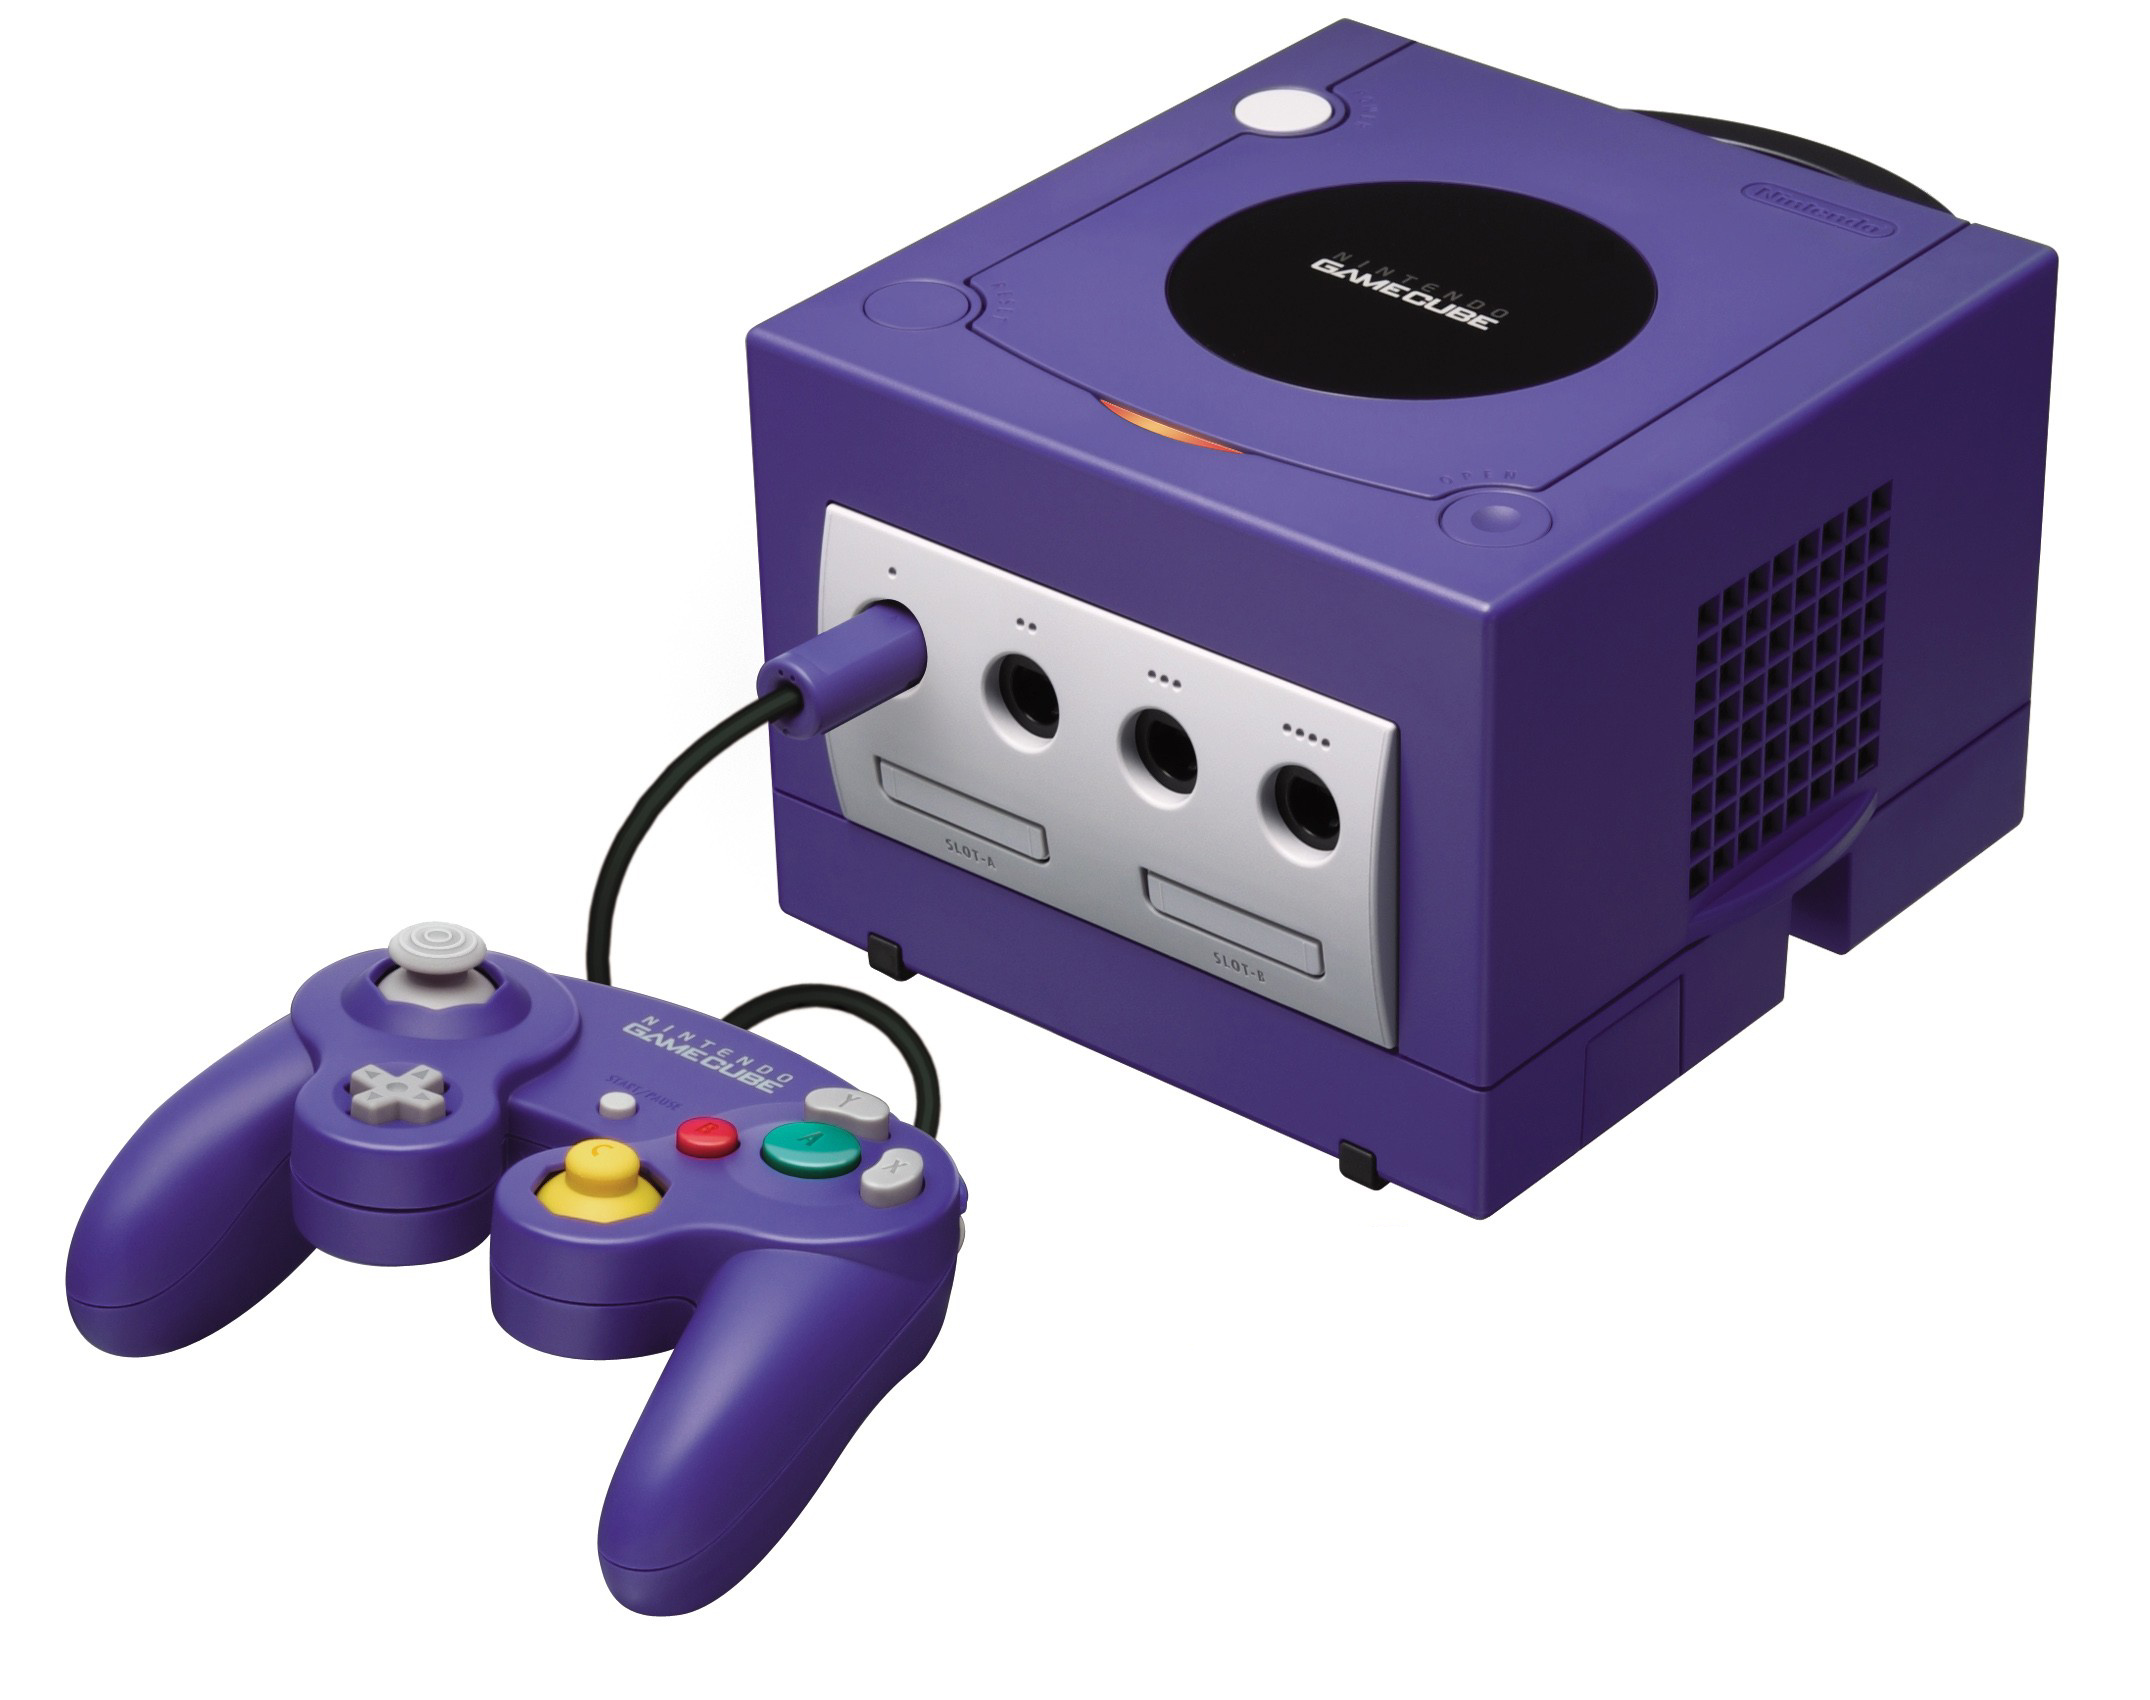 Nintendo GameCube (console), Mario Kart Racing Wiki